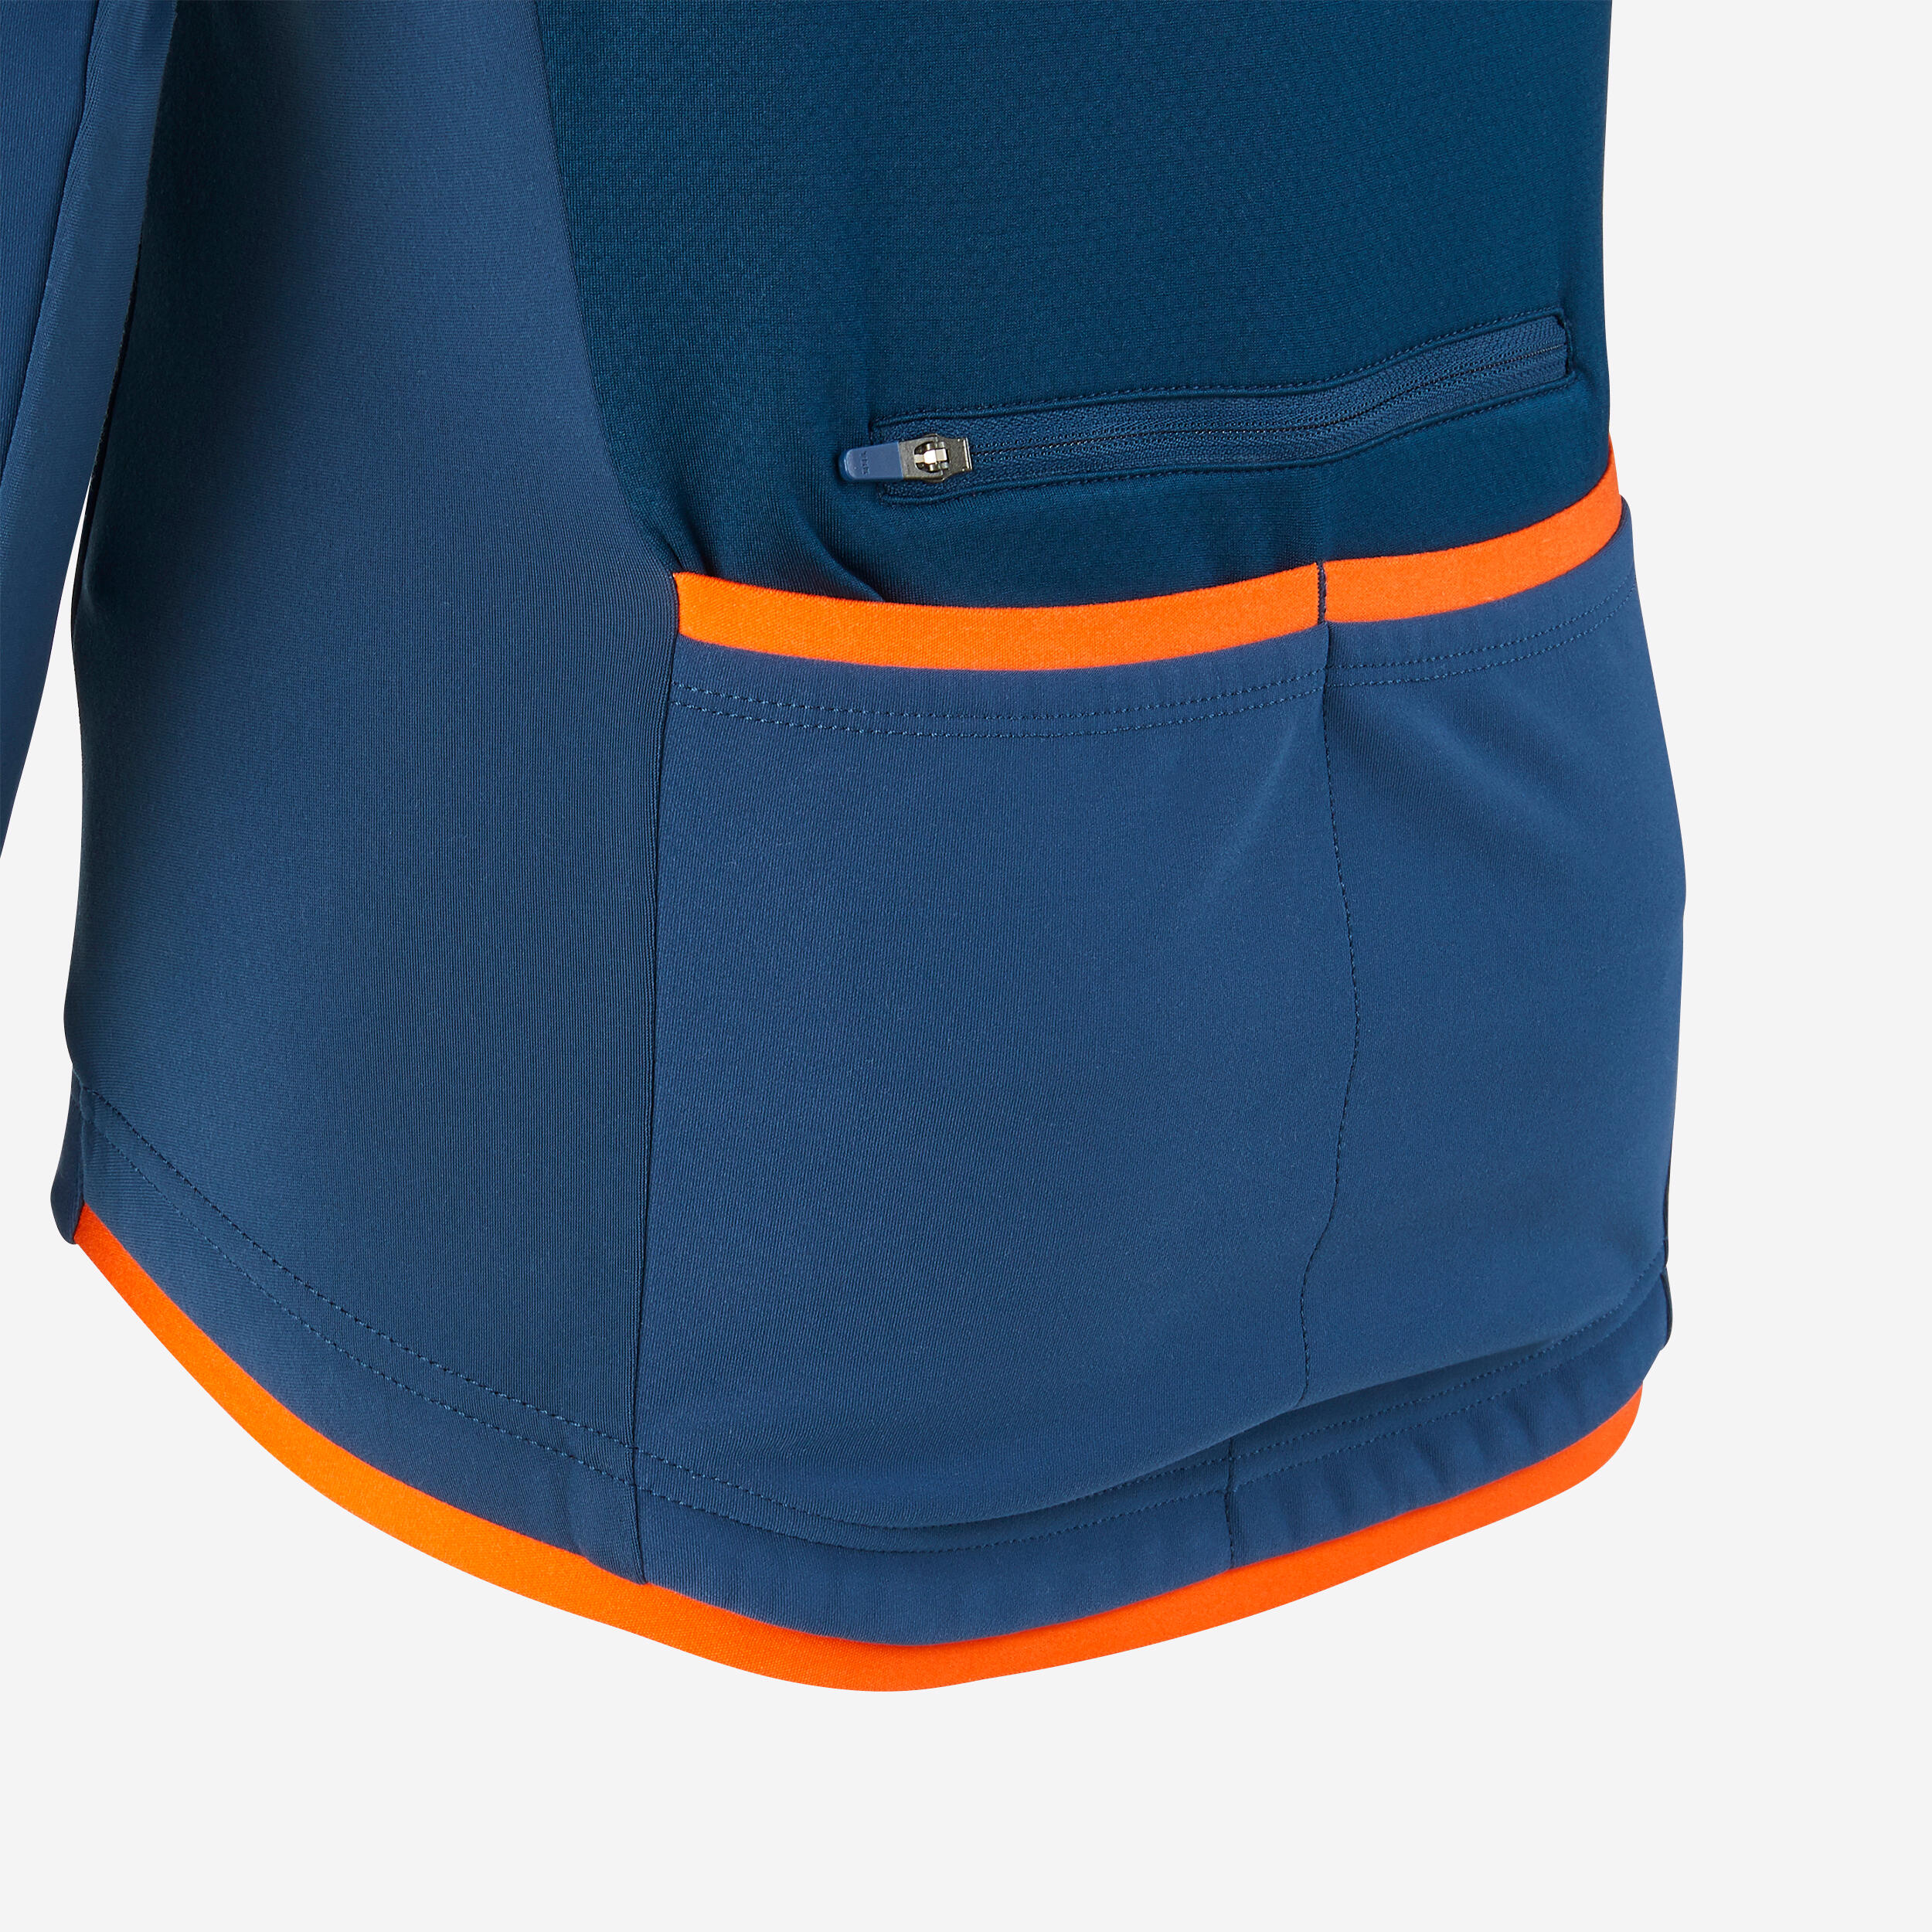 Kids' Cycling Jacket 500 - Blue/Orange 3/4